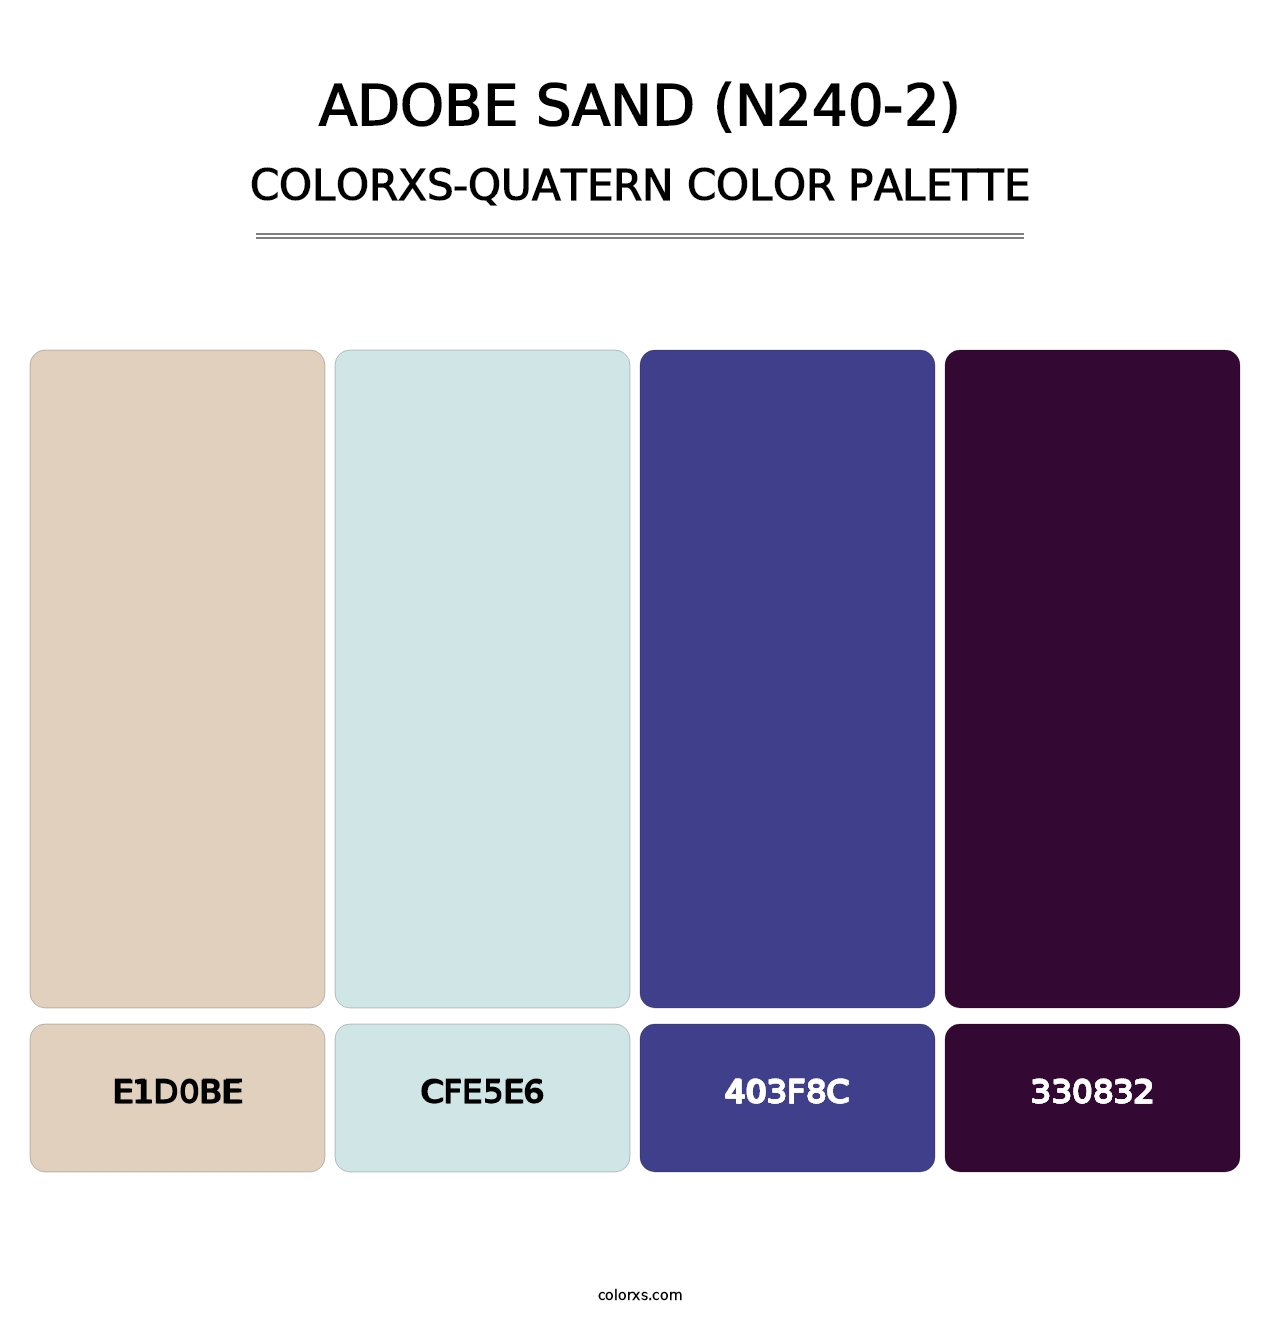 Adobe Sand (N240-2) - Colorxs Quatern Palette